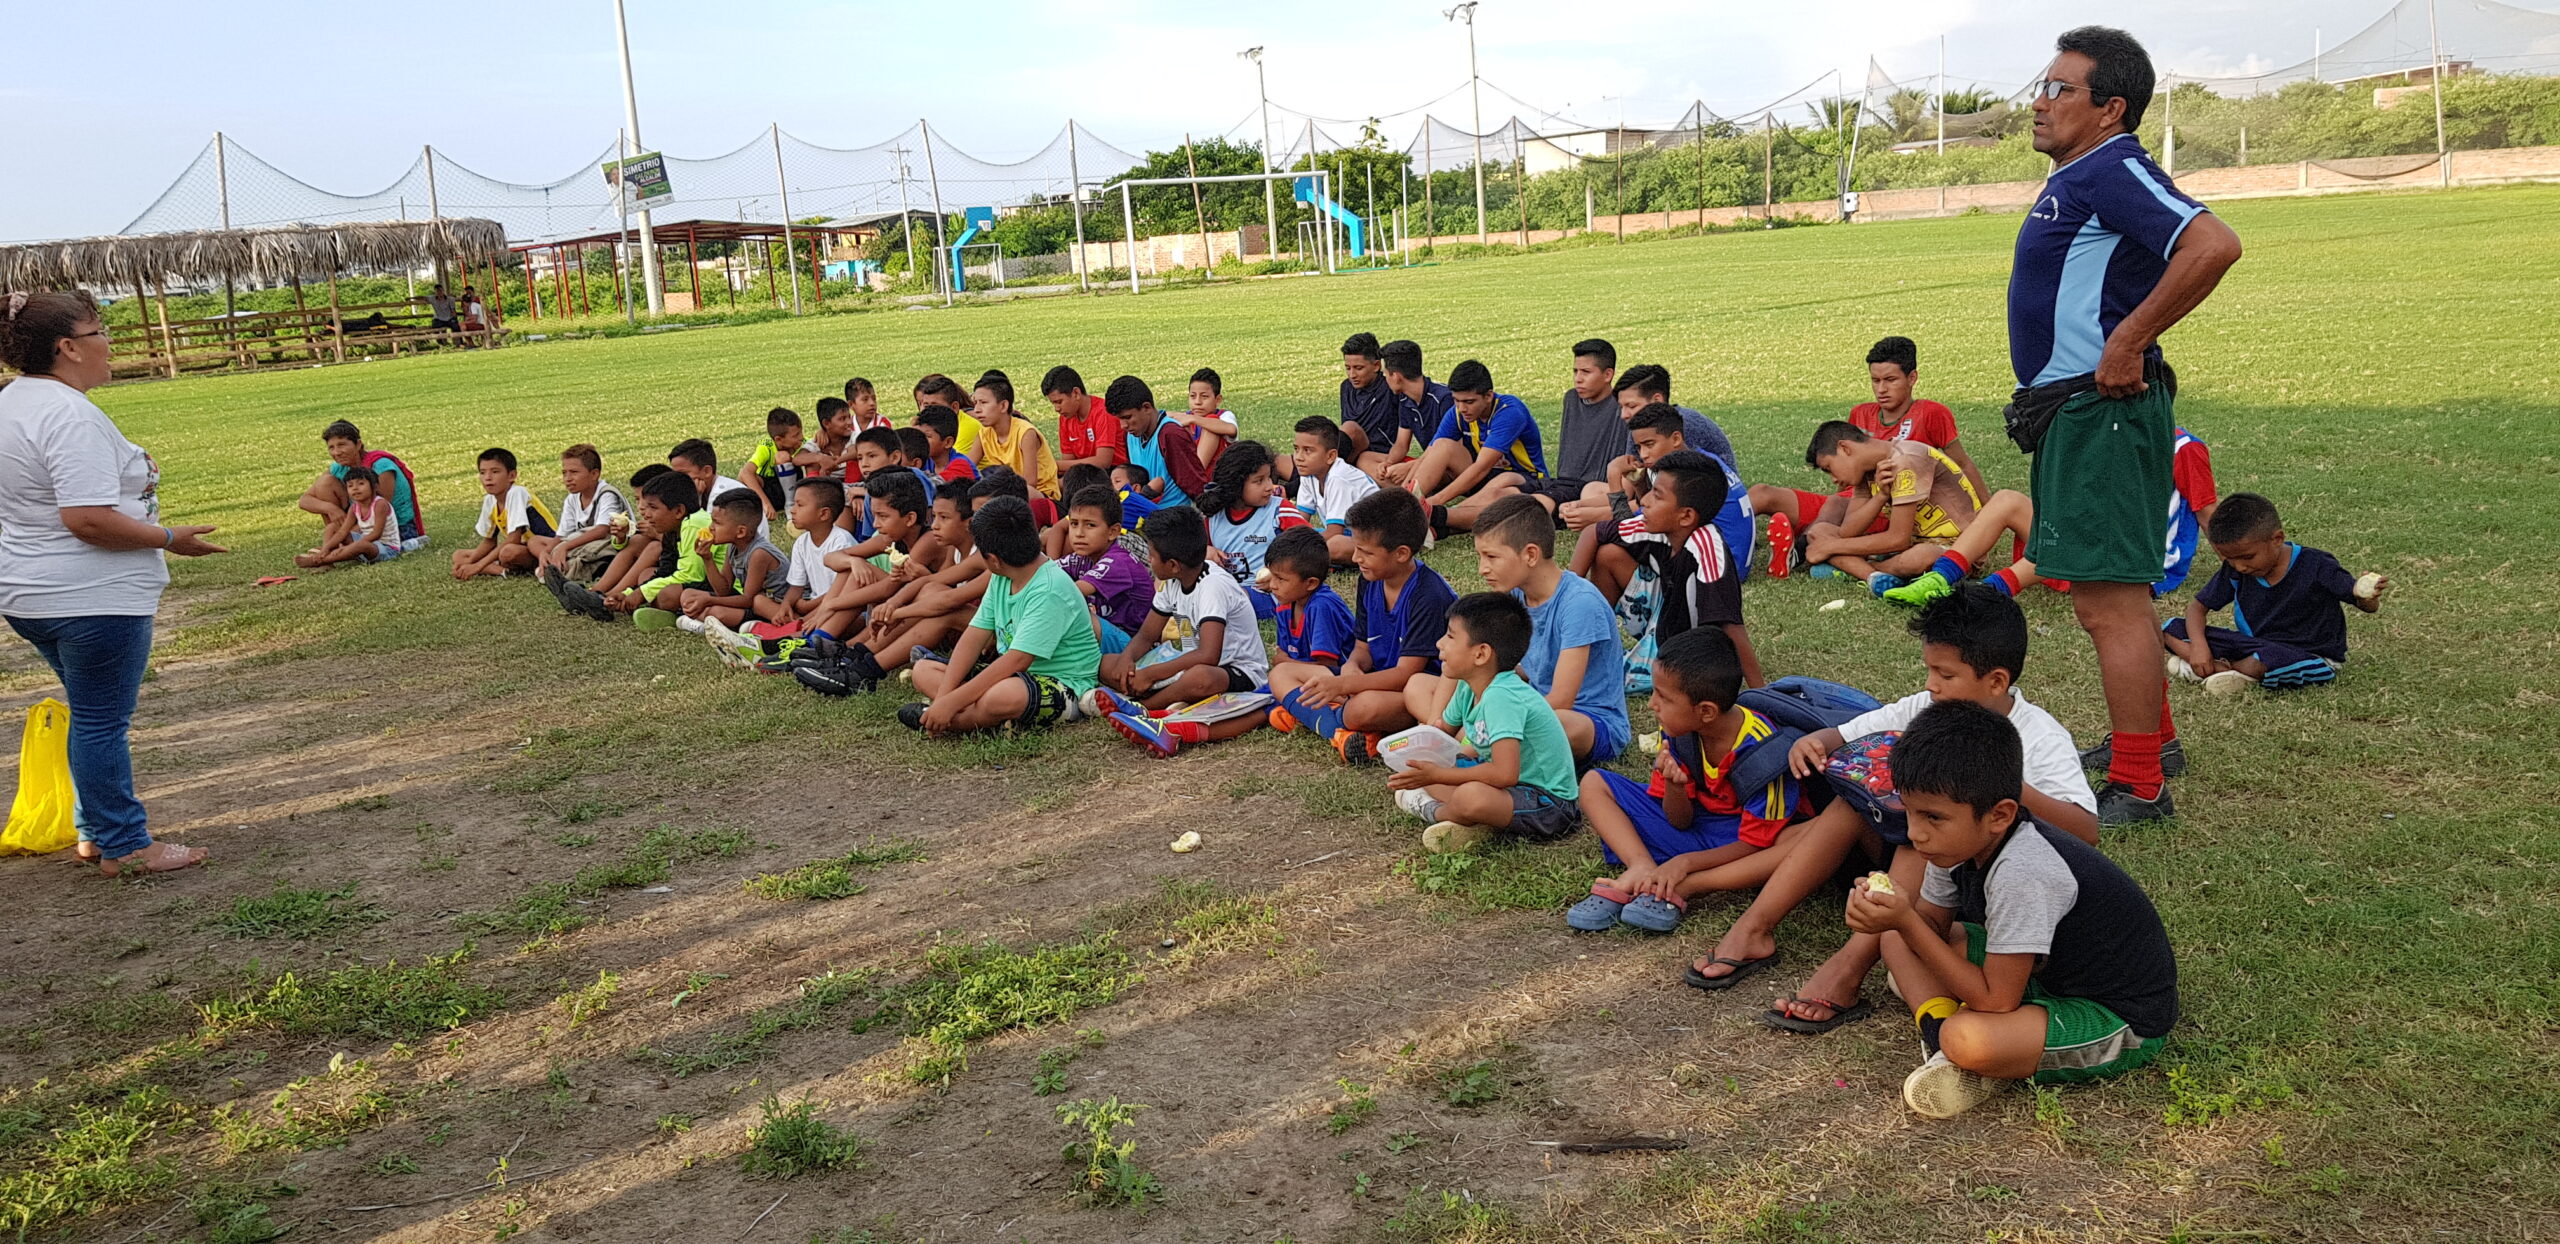 MWPI-Missions_Soccer-School-Club_Mid-World-Partners-International02